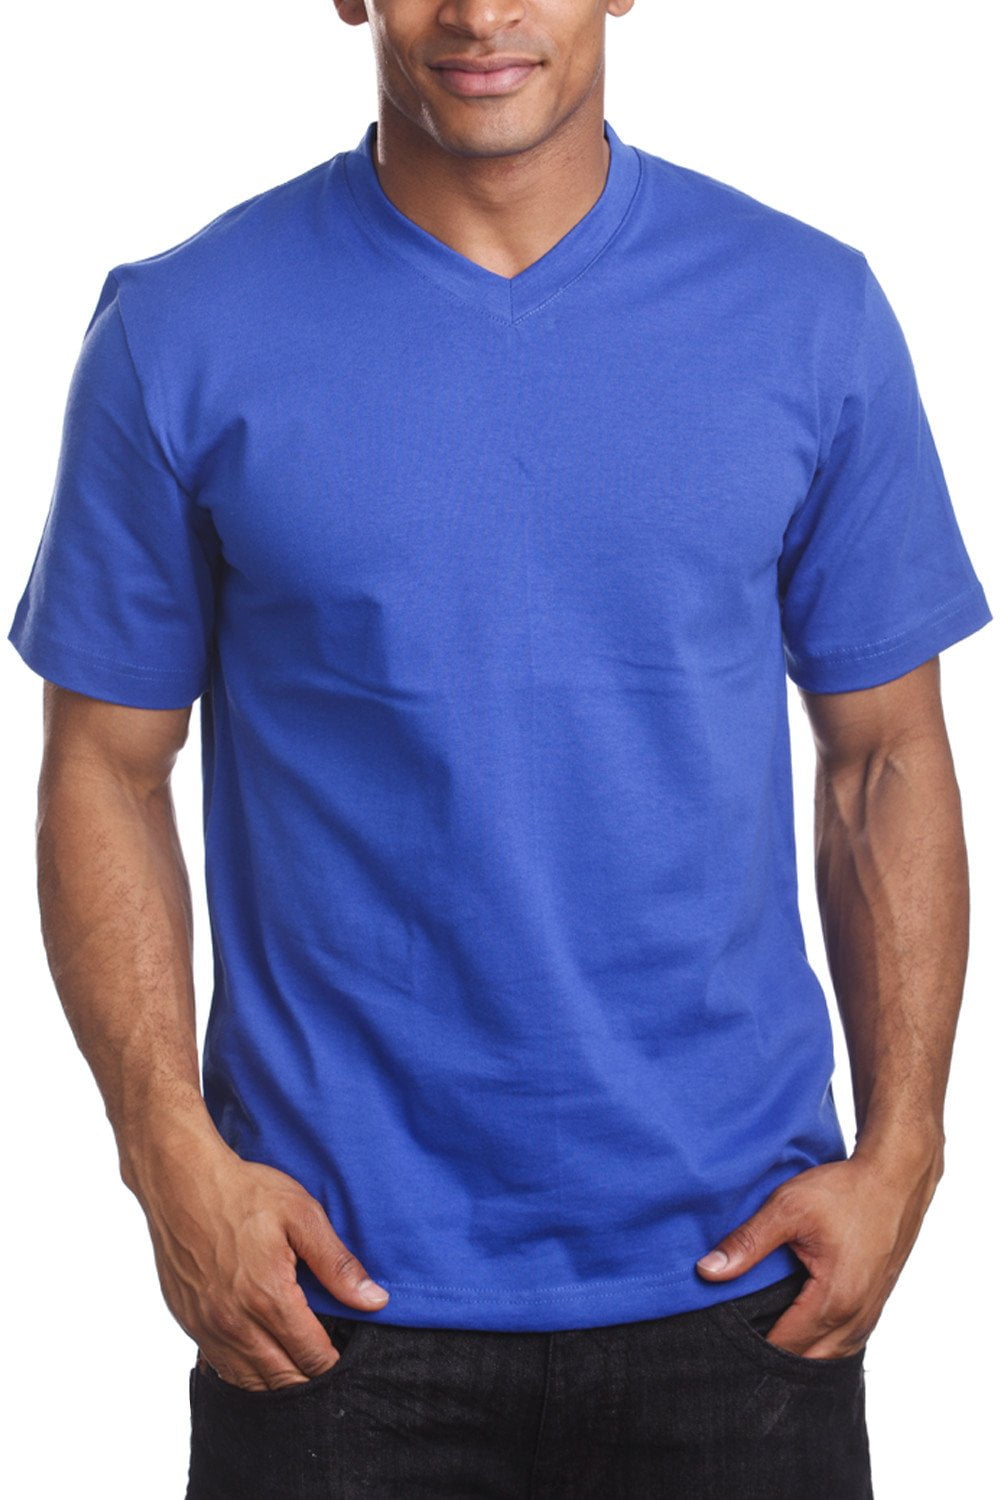 Pro 5 V-Neck Mens Short Sleeve T-Shirt,Royal Blue,2XL